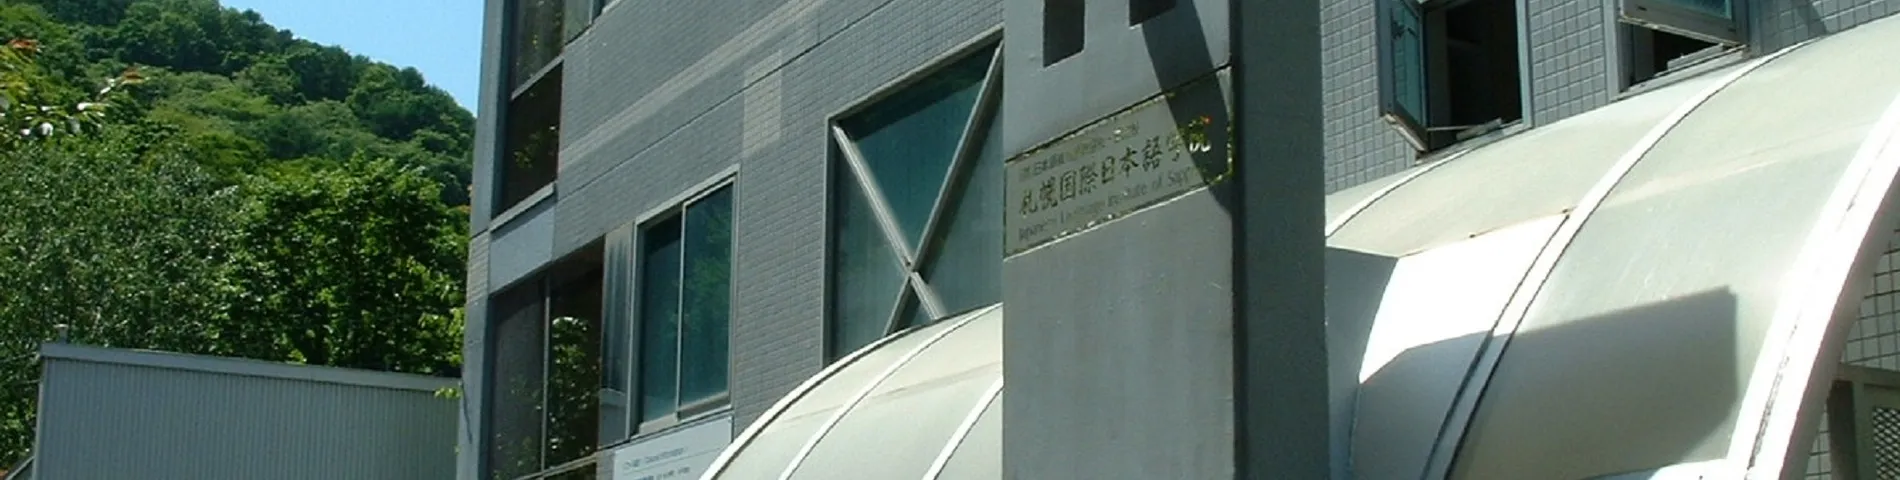 Japanese Language Institute of Sapporo picture 1